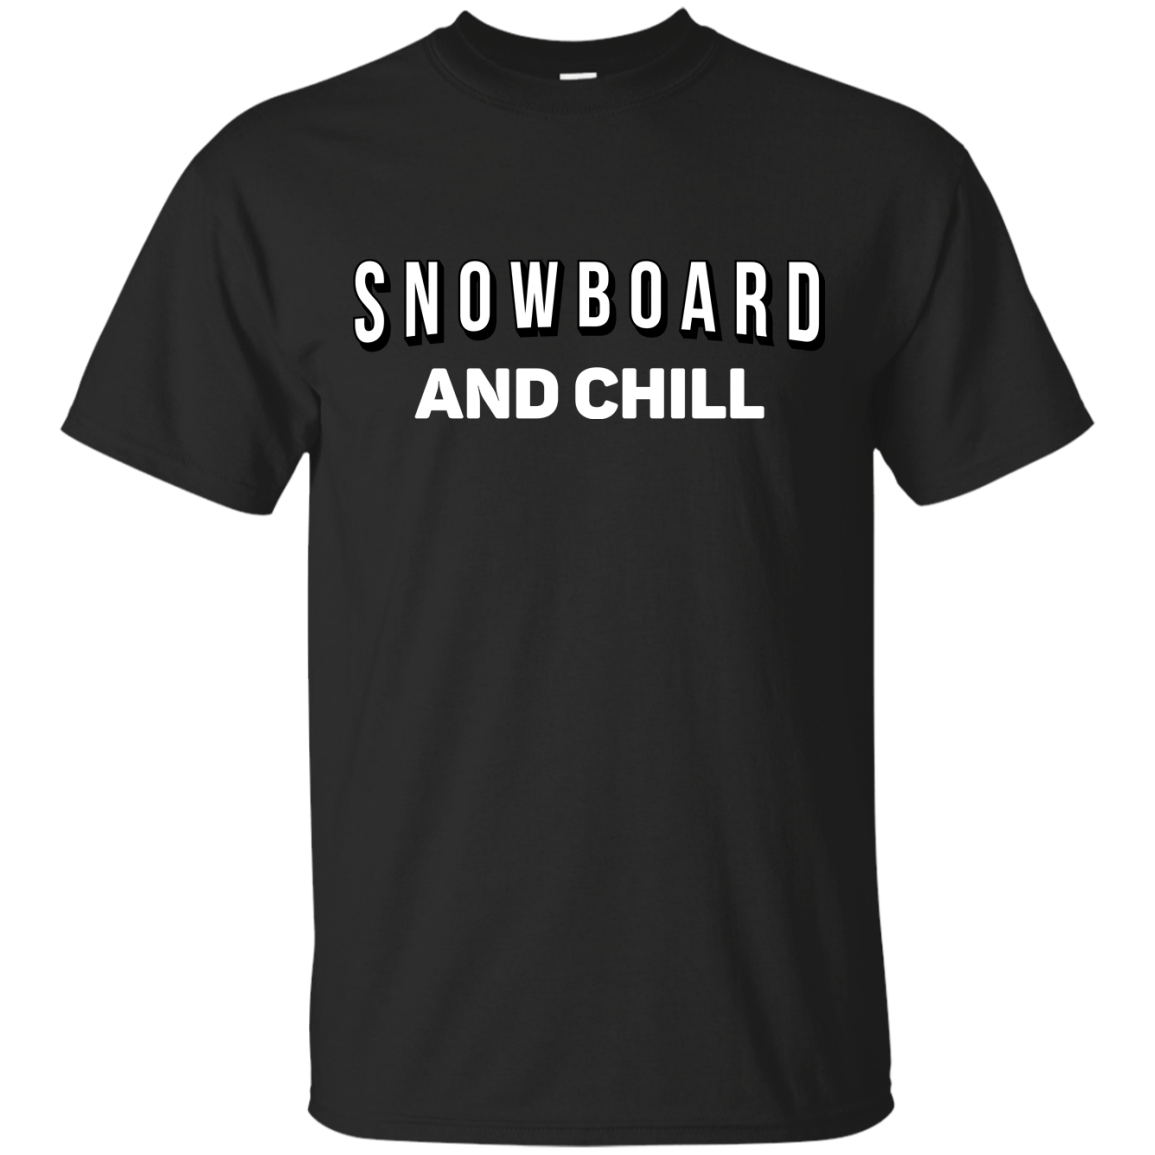 Snowboard and Chill Men's Tees and V-Neck - Powderaddicts